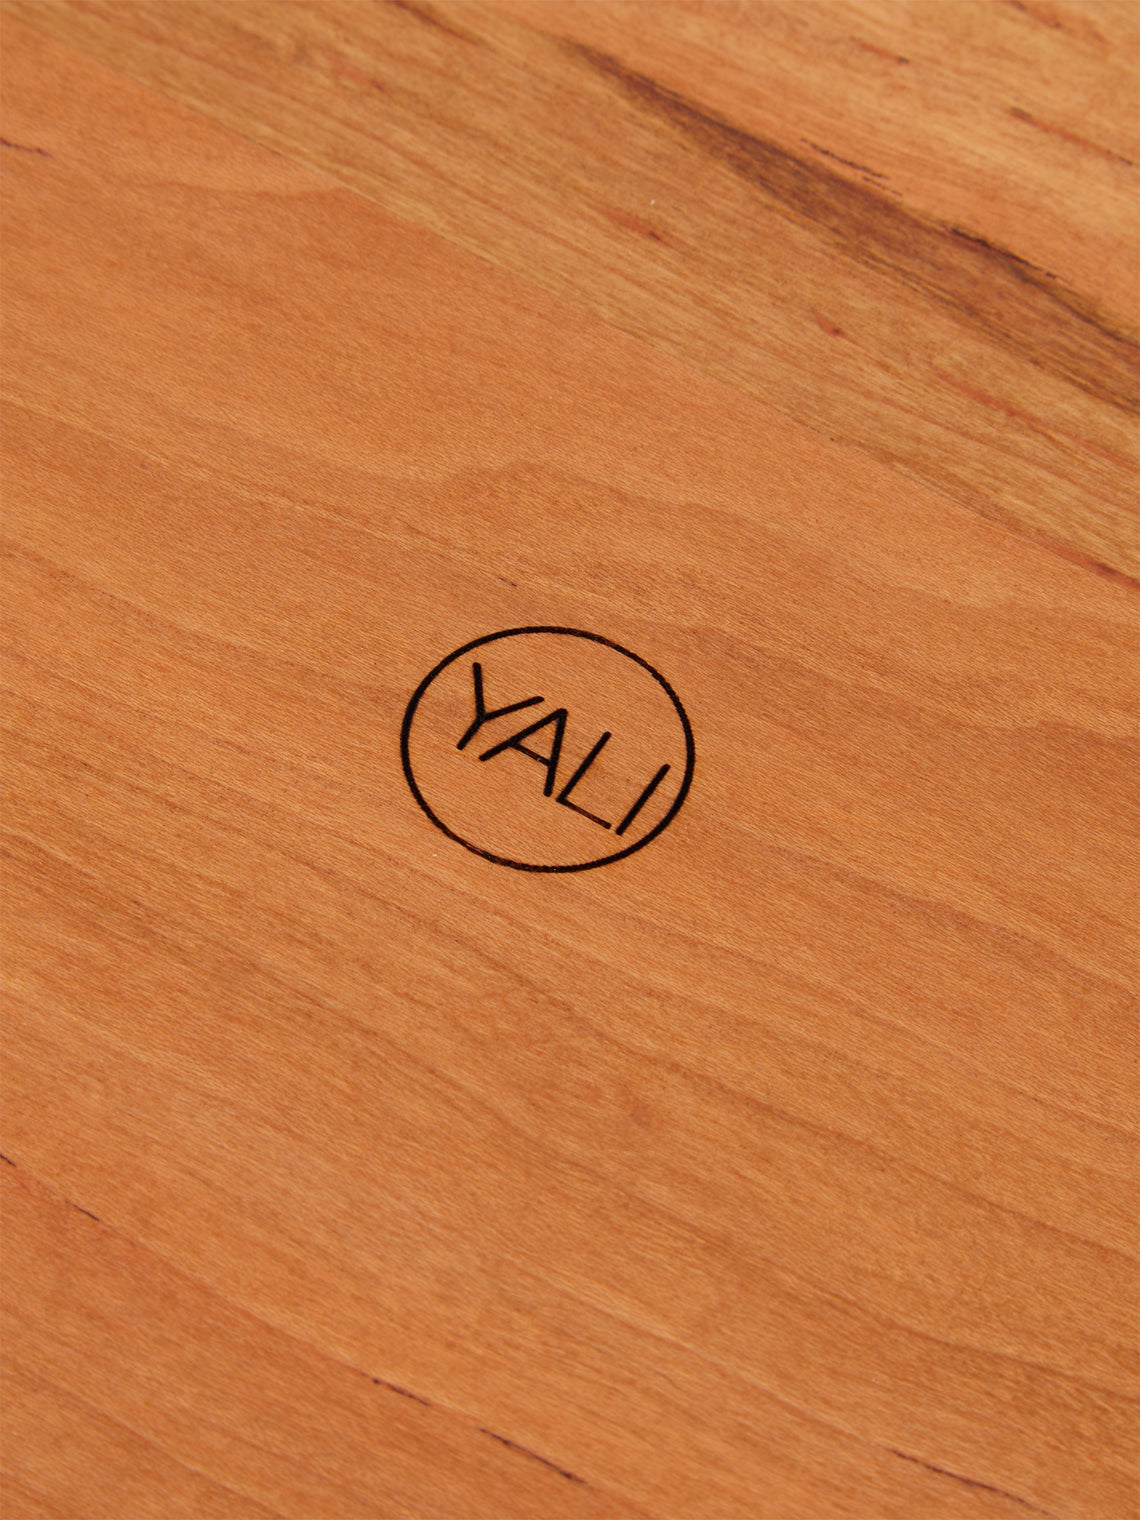 Yali Glass - Moribana Medium Cherry Wood Tray -  - ABASK